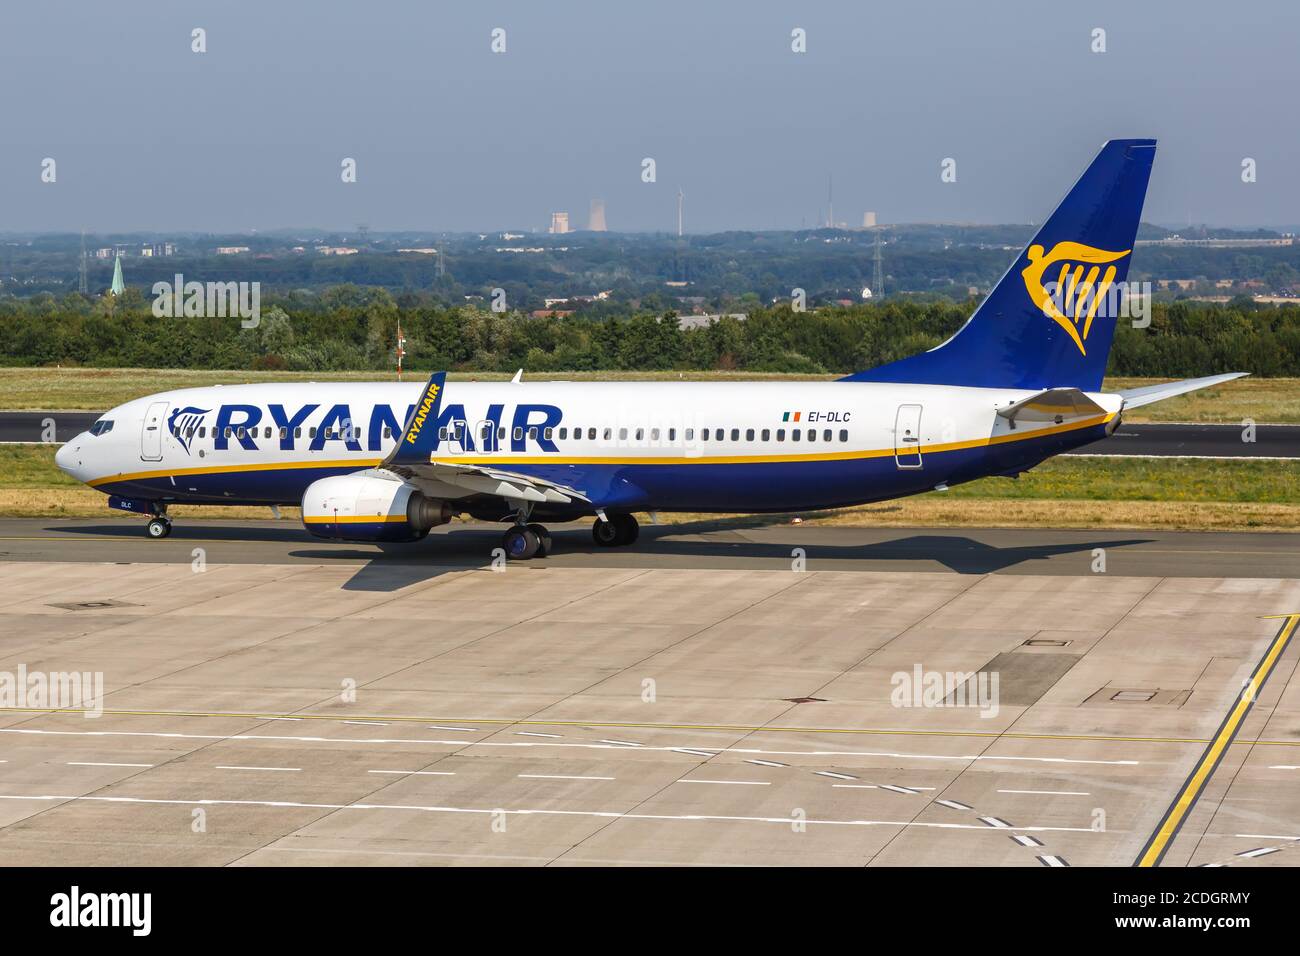 Dortmund, Germania - 10 agosto 2020: Aereo Ryanair Boeing 737-800 all'aeroporto Dortmund (DTM) in Germania. Boeing è un produttore americano di aeromobili Foto Stock